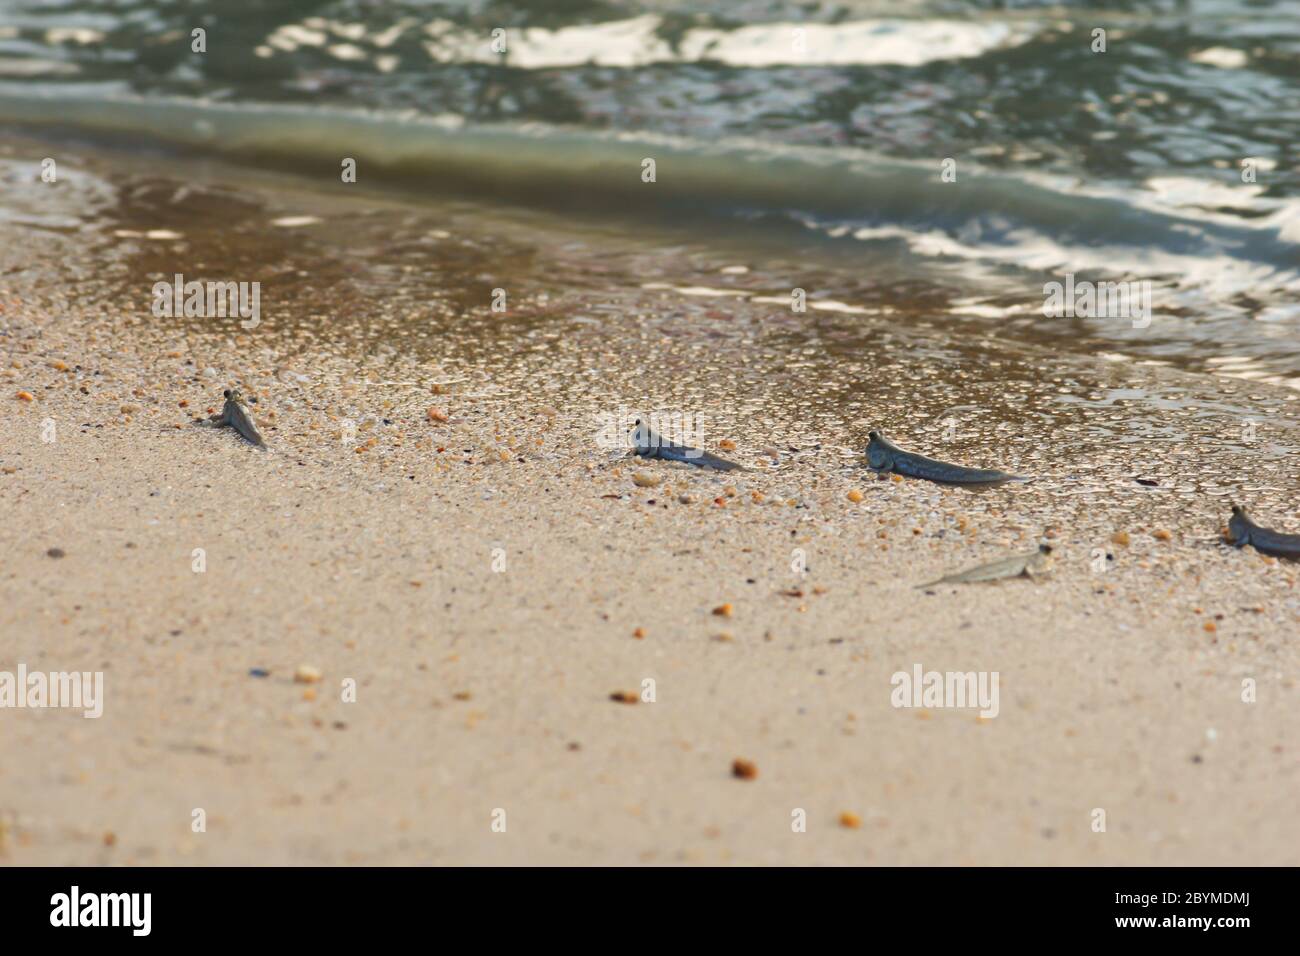 little fish mudskipper or amphibious fish on mud at sea Stock Photo